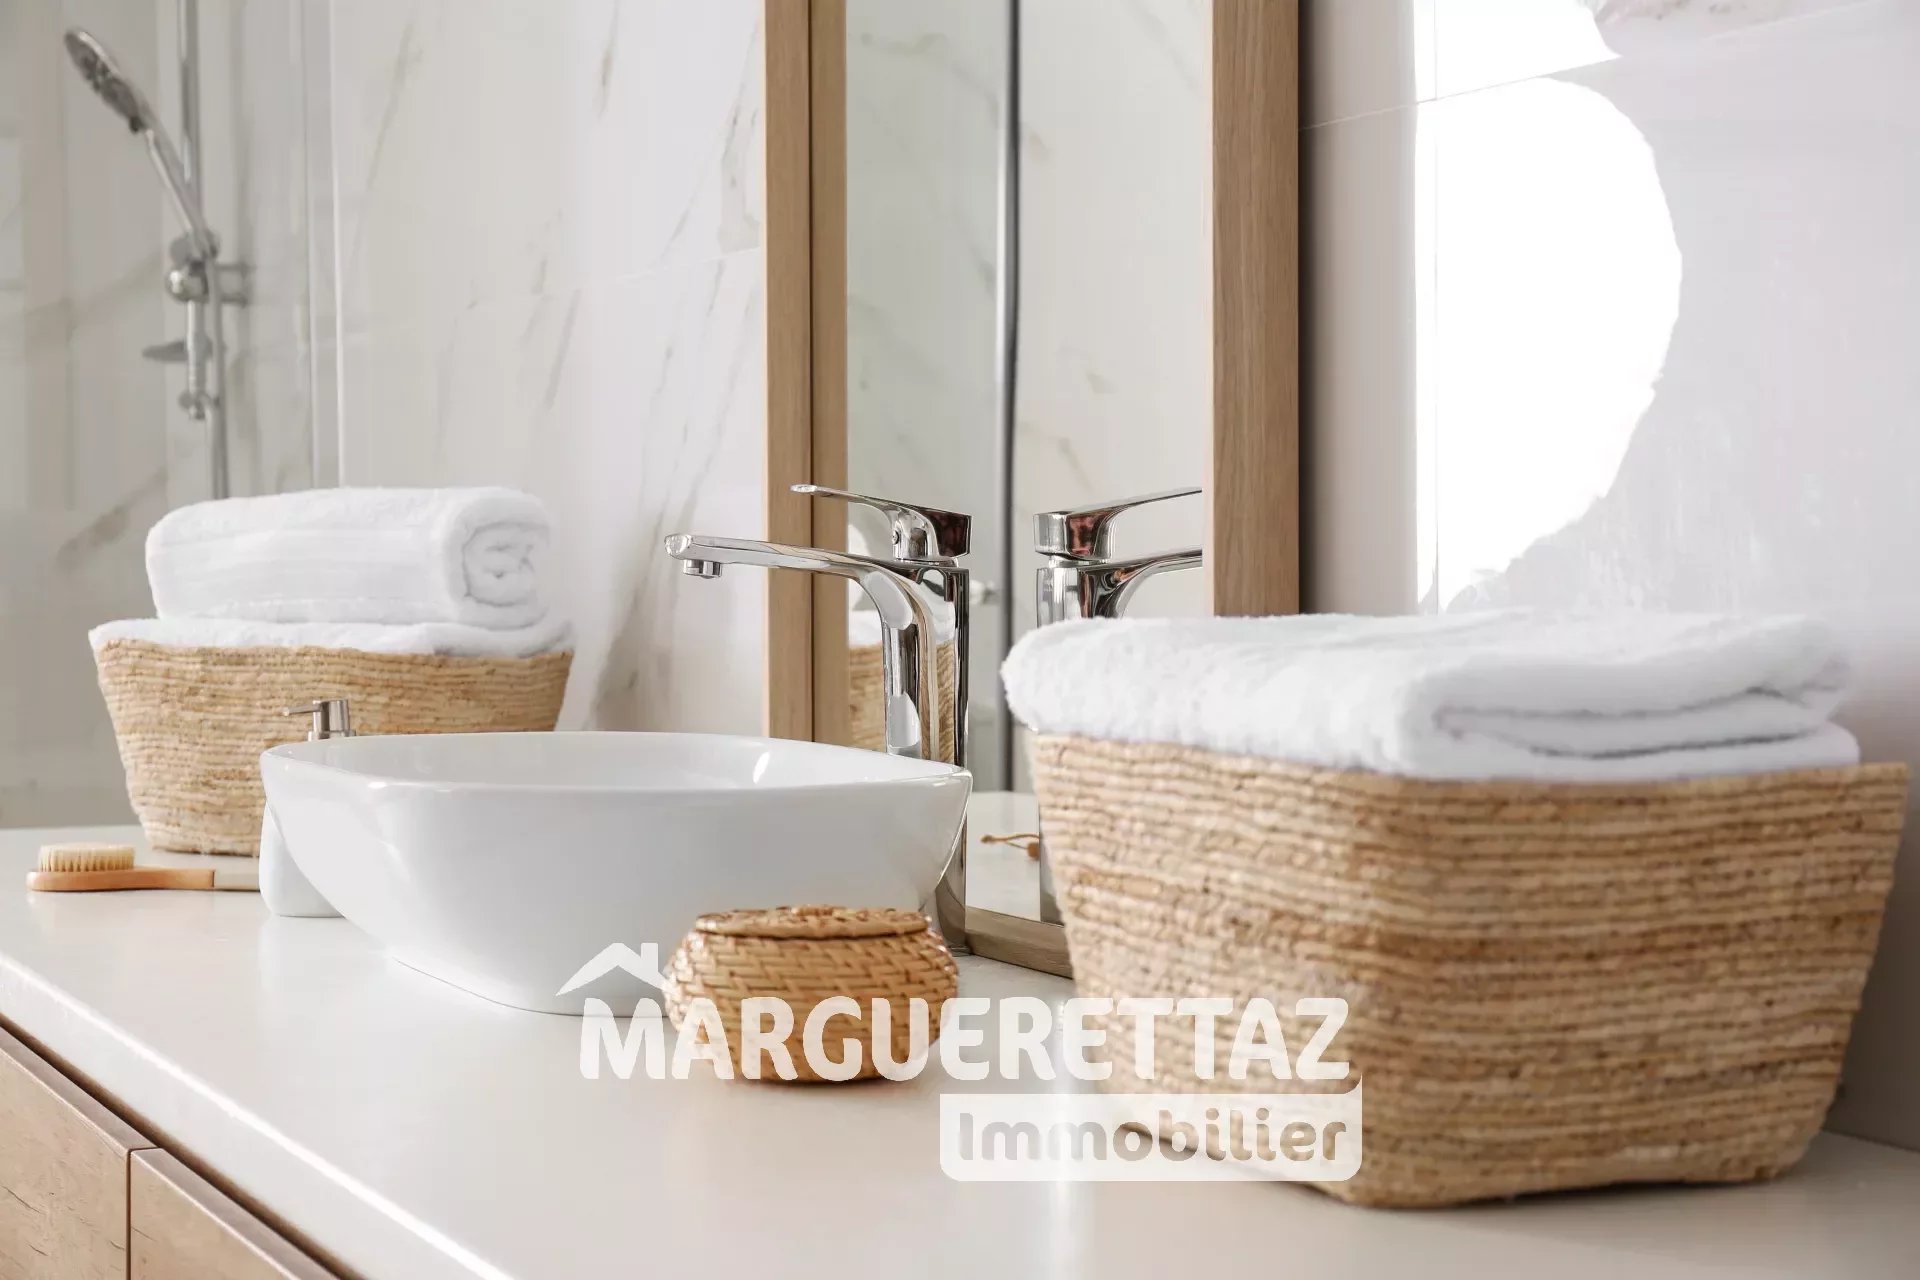 Large mirror and vessel sink in bathroom lifestyle comfortable interior bath large hygiene domestic idea design minimalism elegant spa wash hotel luxury decorative decor accessories washbasin furnitur